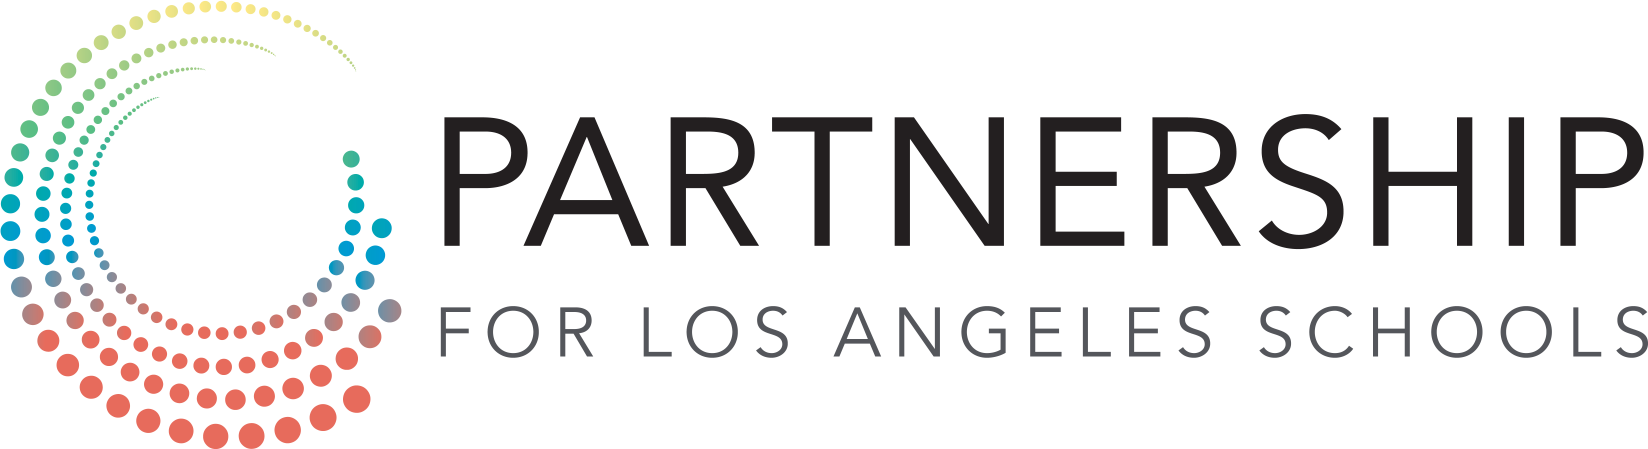 Partnership for Los Angeles Schools logo